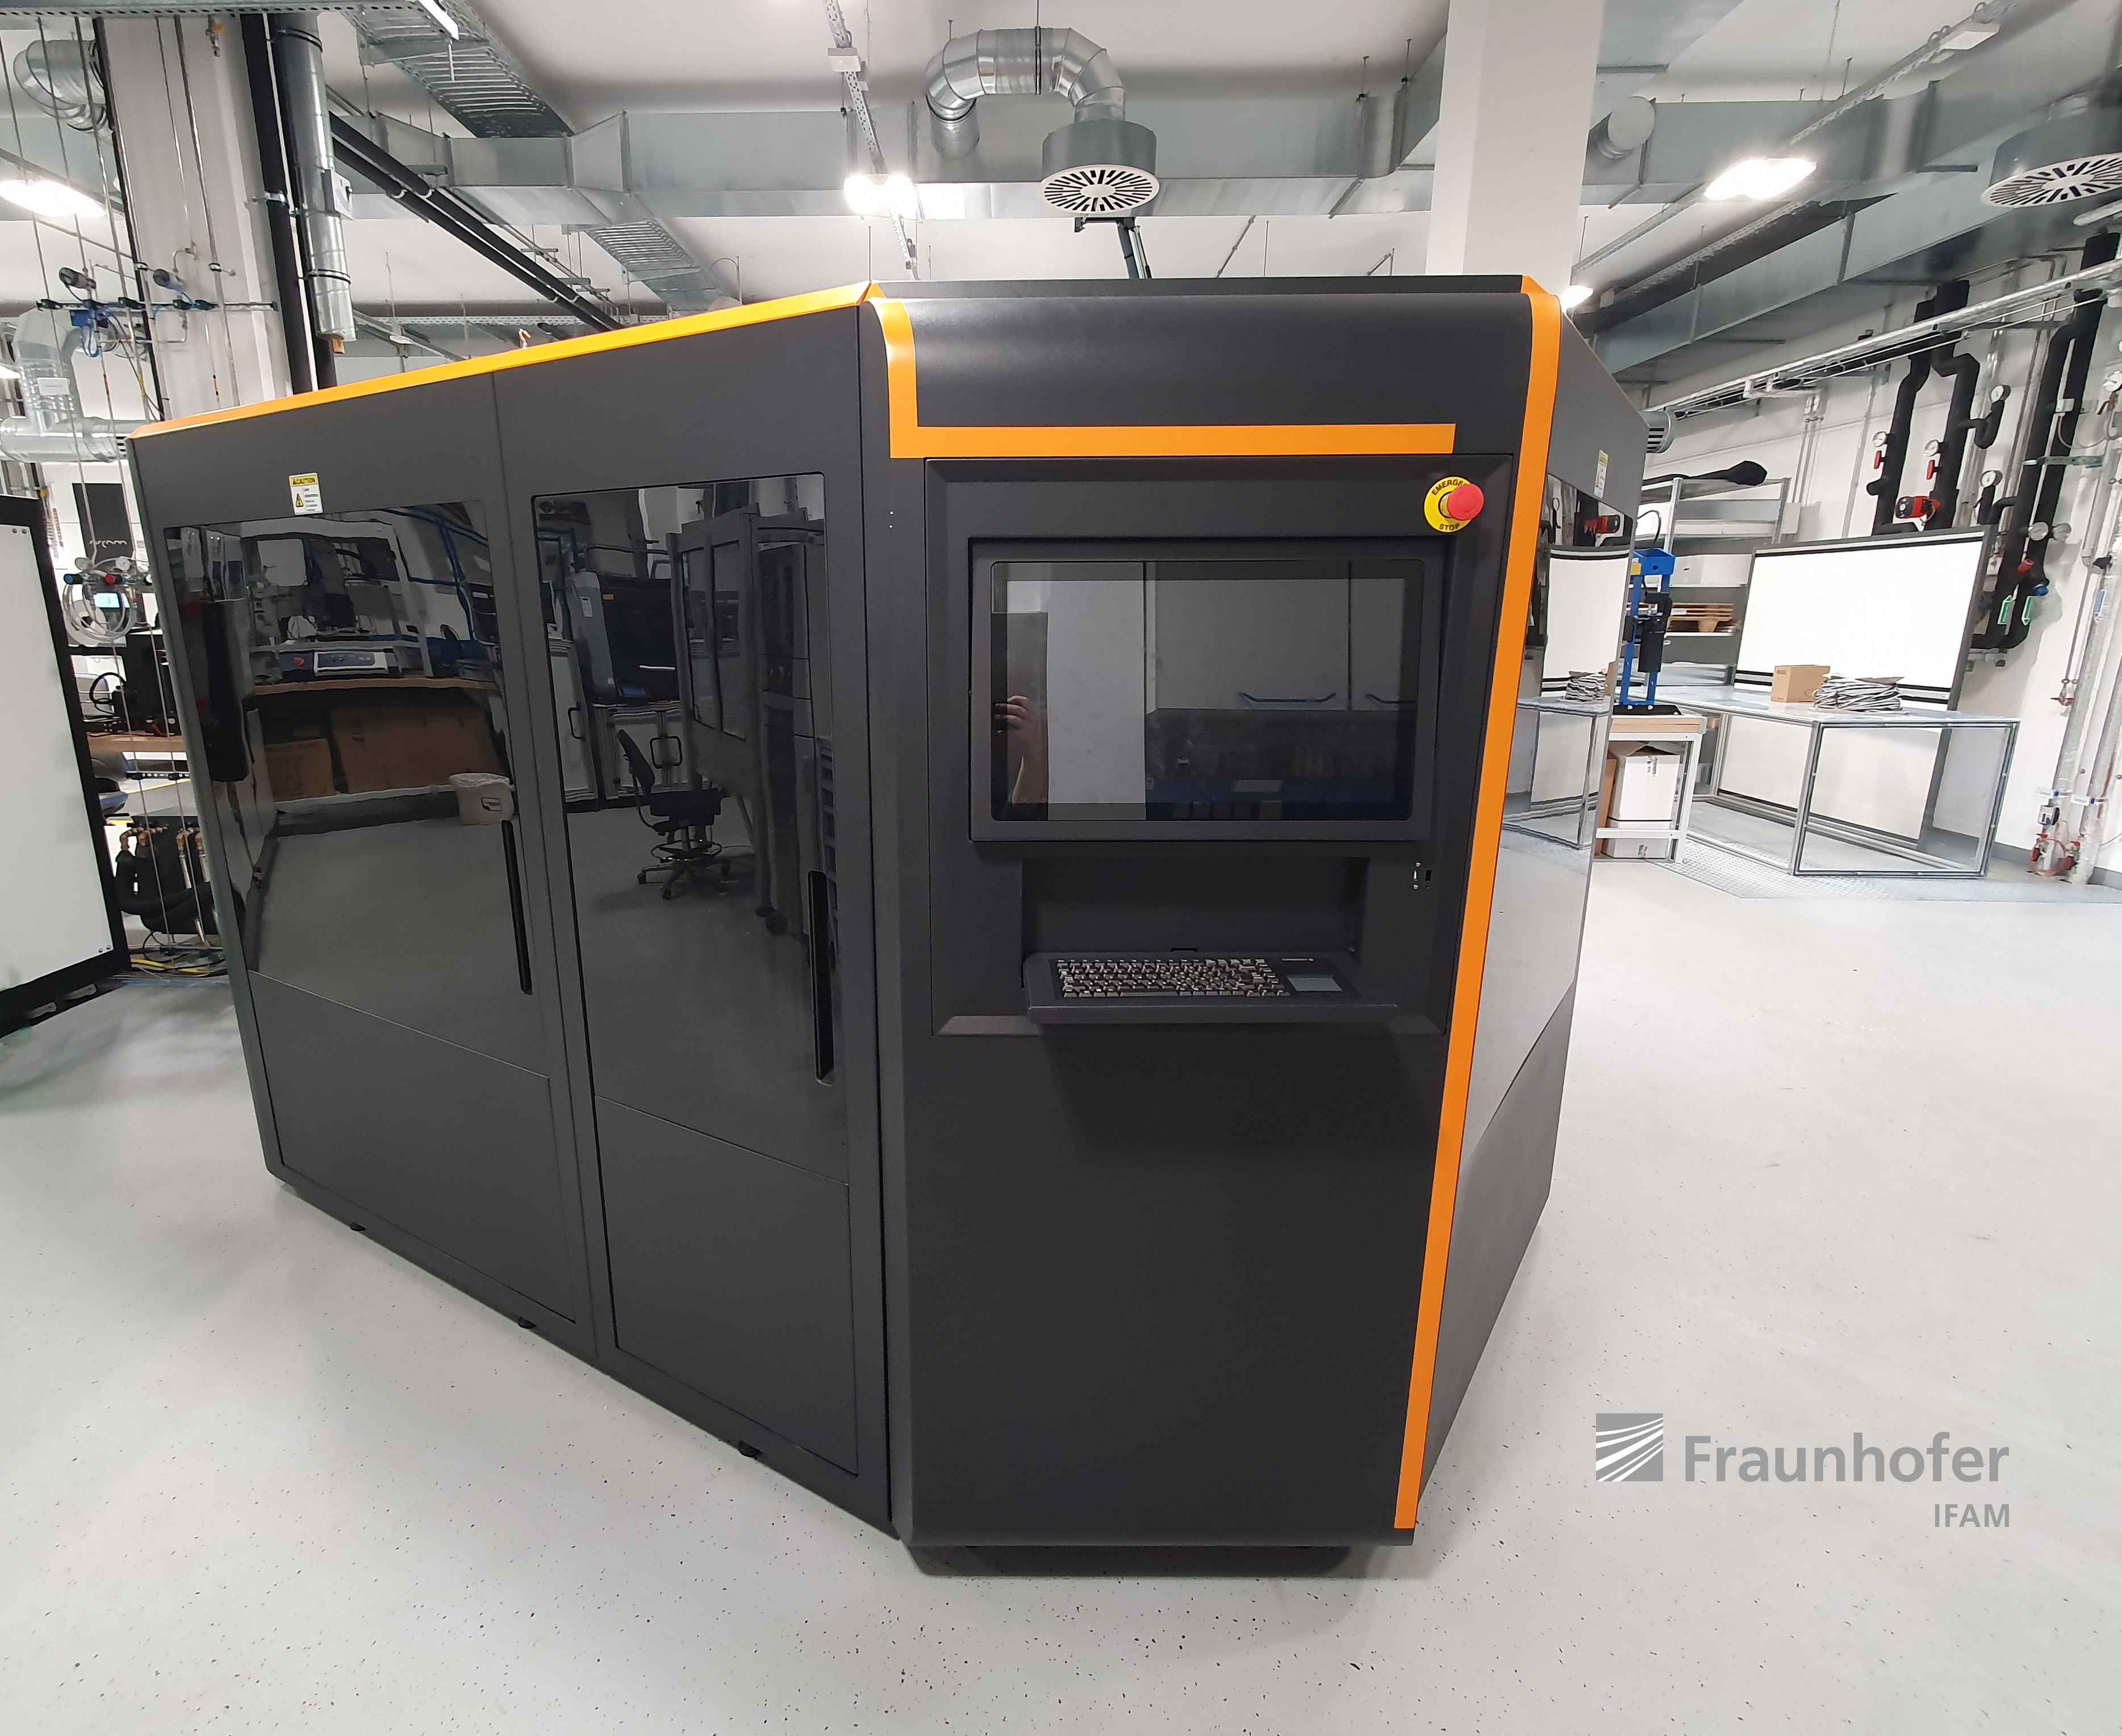 The MoldJet printing system at Fraunhofer.